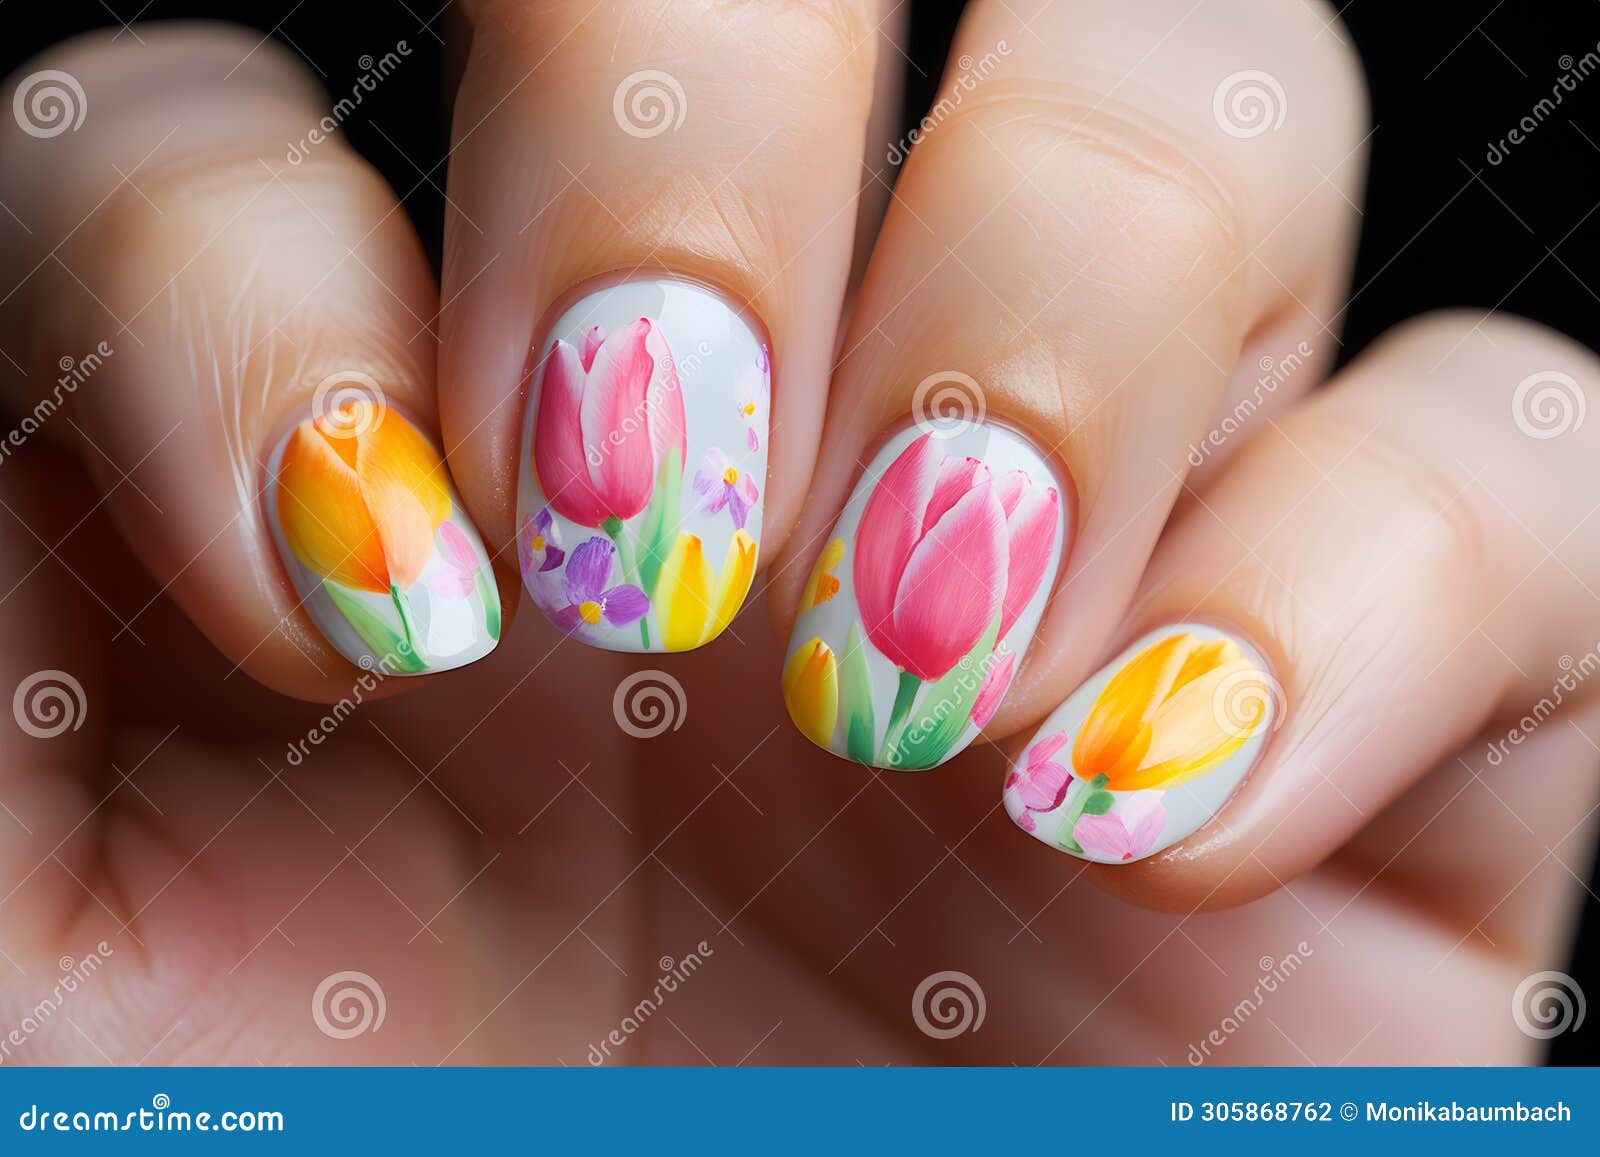 20 Best Tulip Nails ideas | tulip nails, flower nails, nails